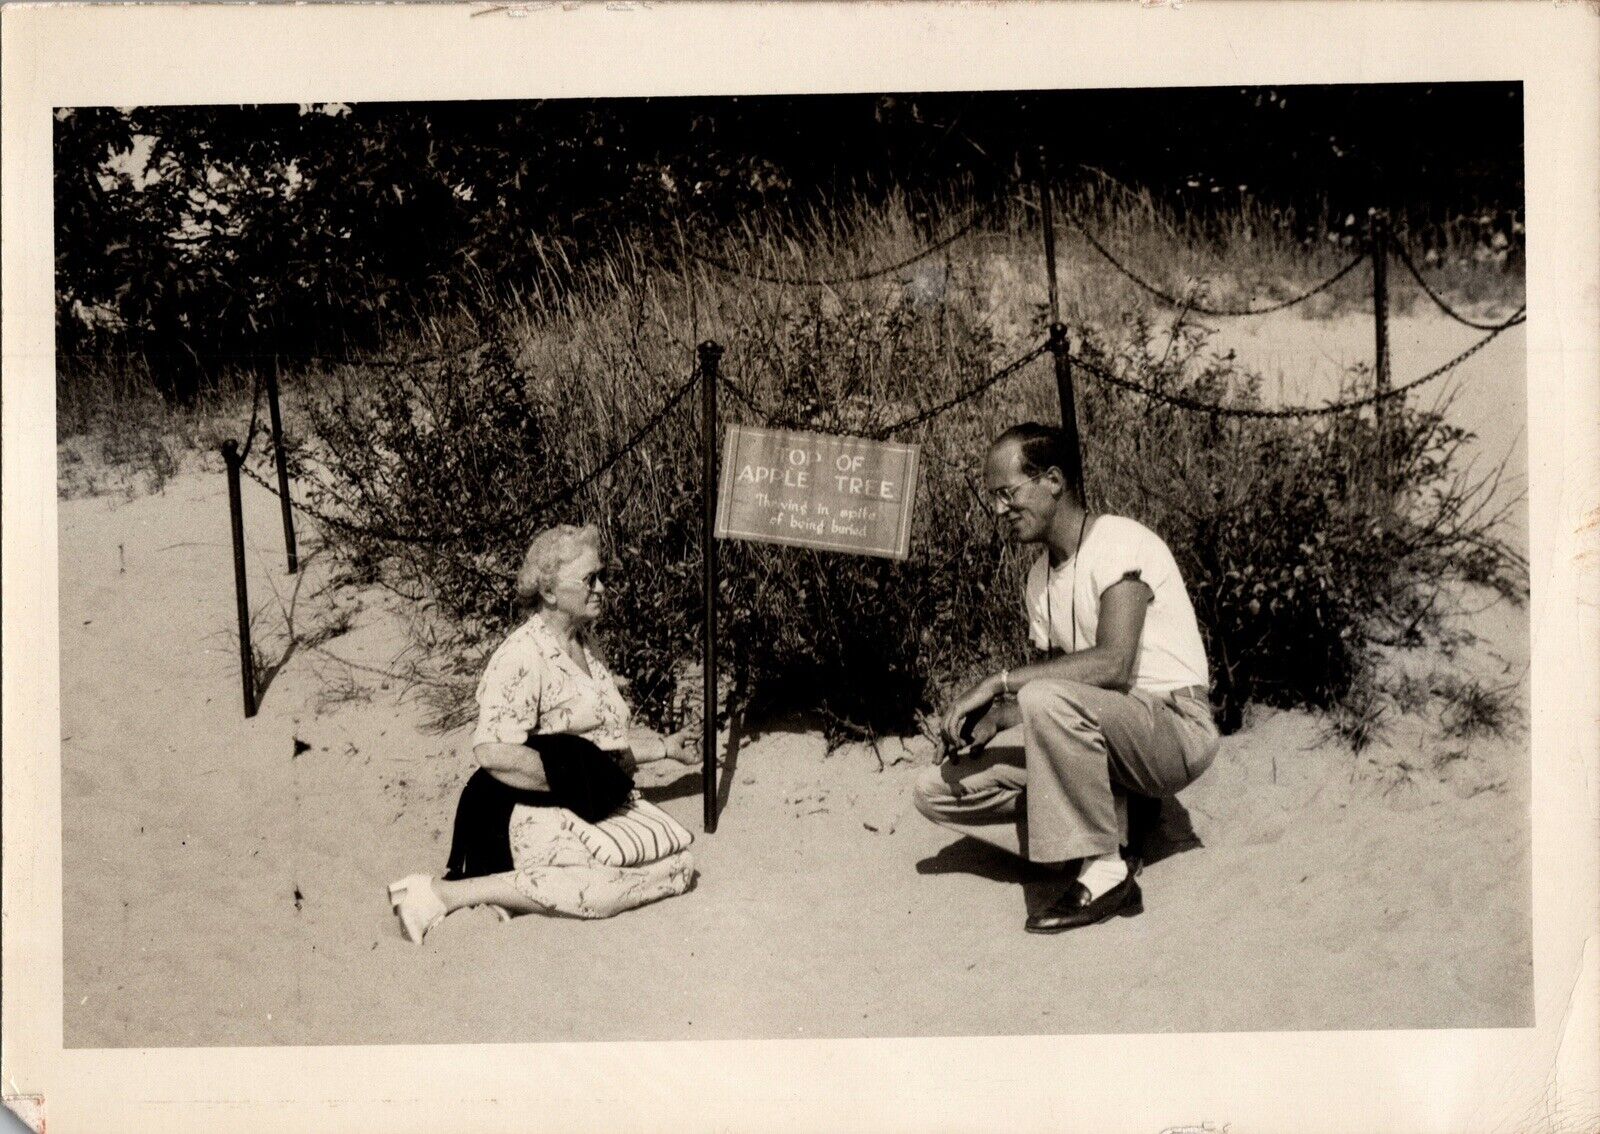 Vtg Found Photo 1947 Desert Of Maine Freeport Summer Vacation Family Retro